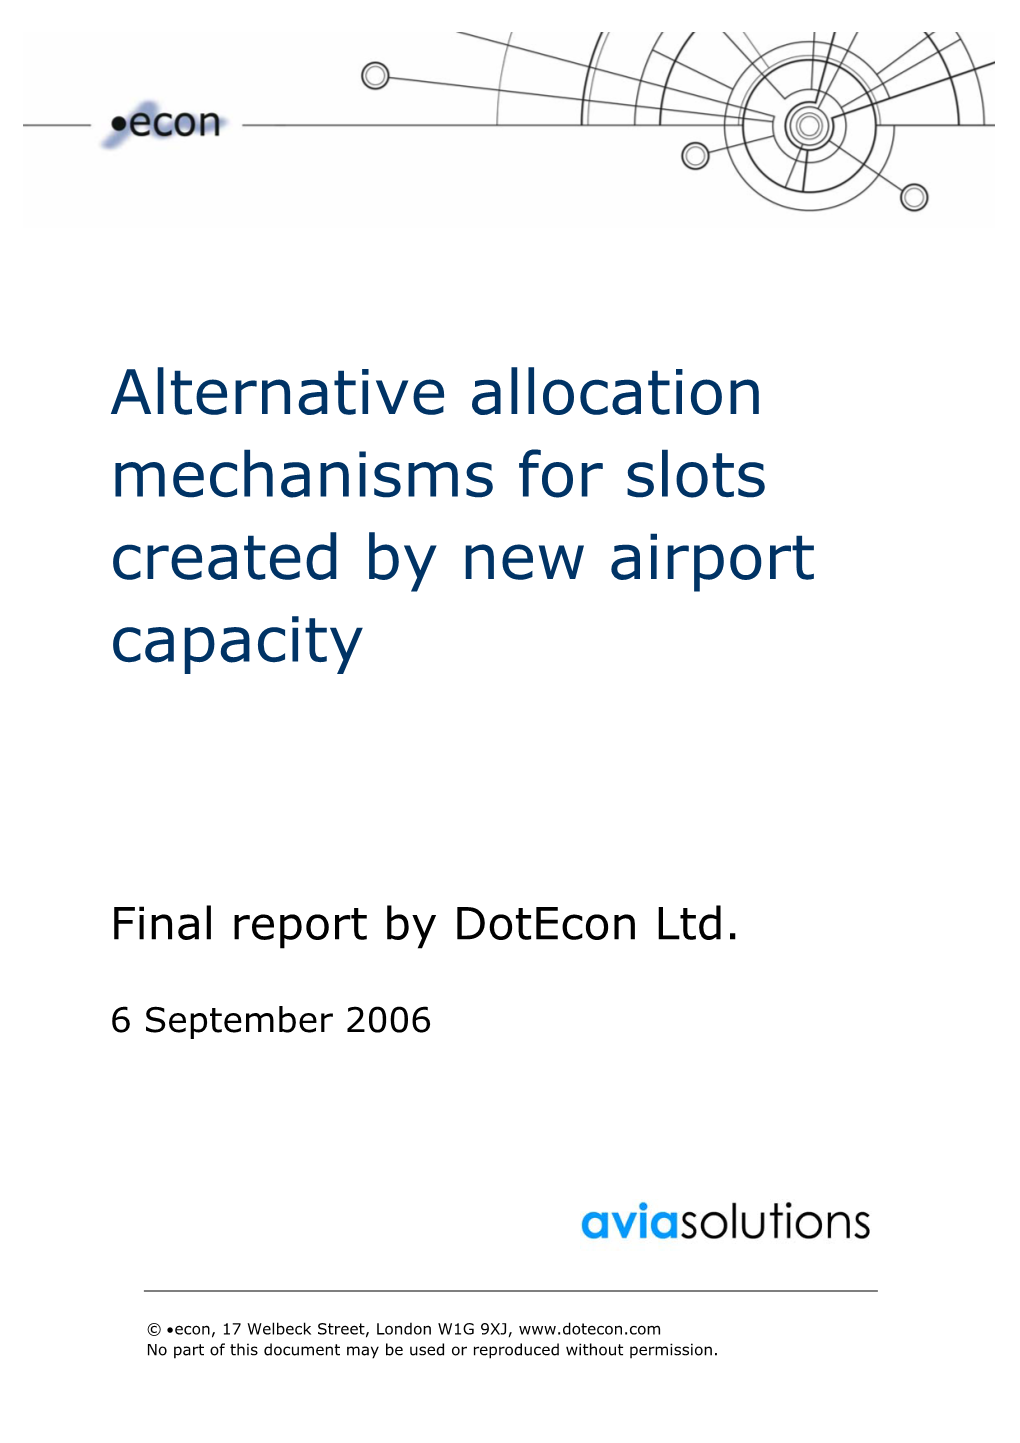 Report for the Dot on Alternative Allocation Mechanisms for Slots